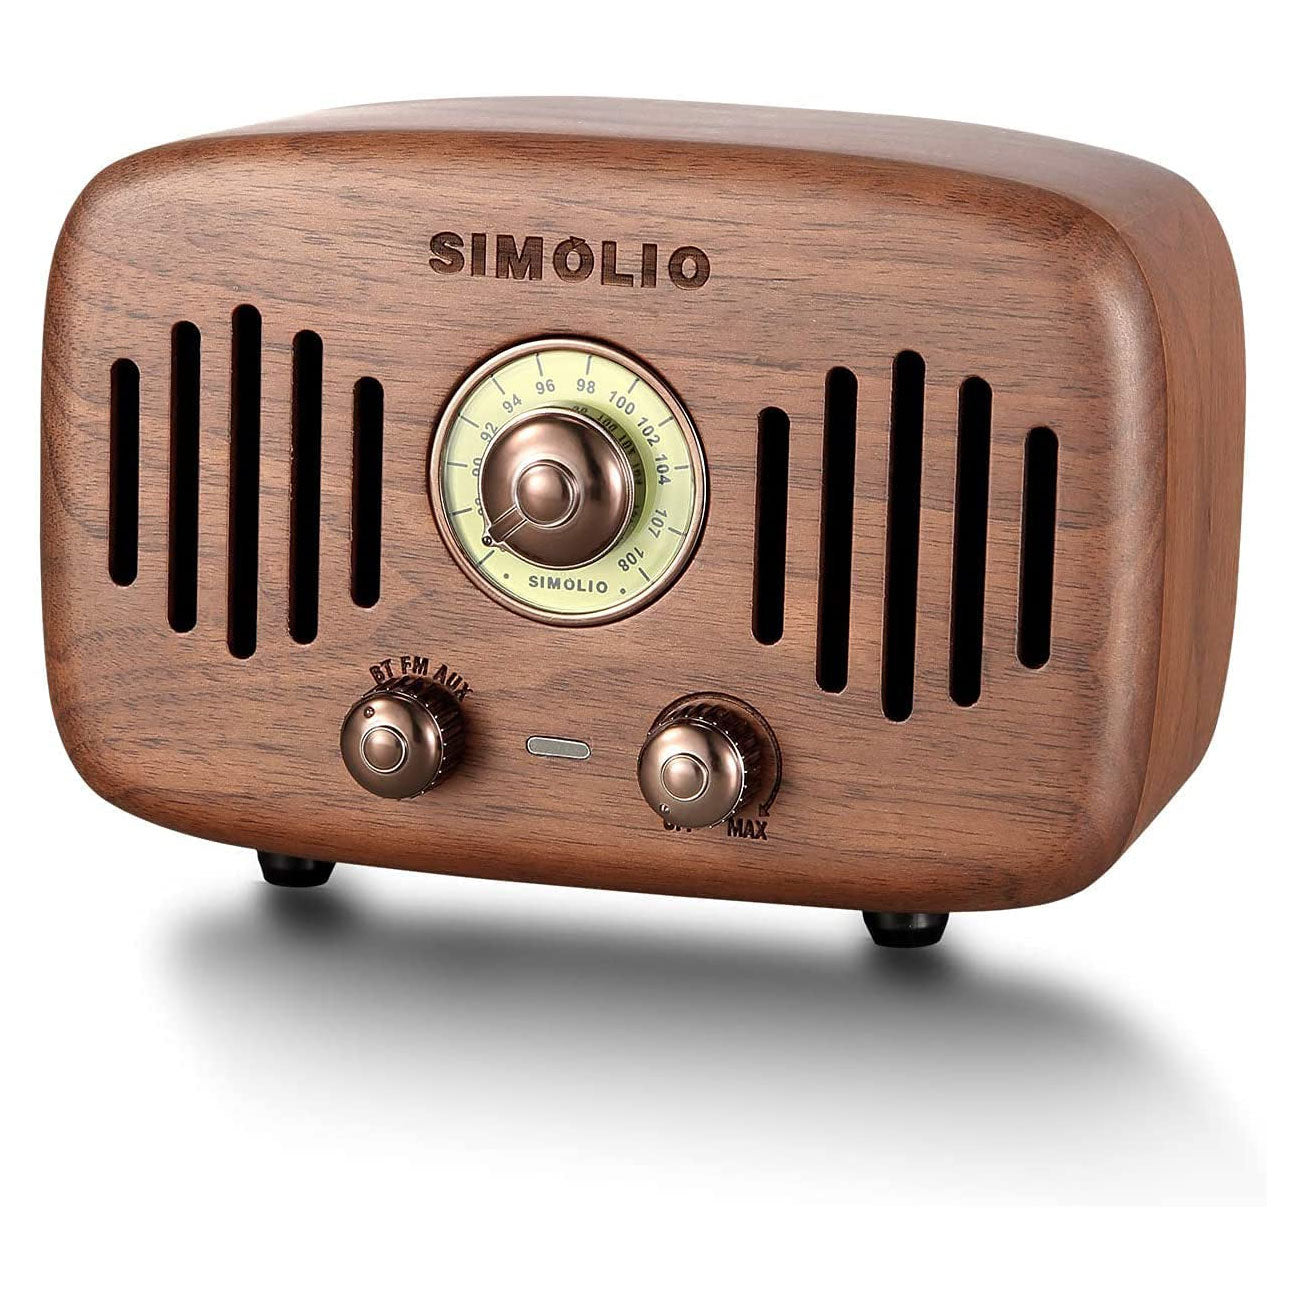 Keel Kwalificatie Diakritisch SIMOLIO Stereo Wooden Retro Vintage Bluetooth Speakers FM Radio – Simolio  Electronics